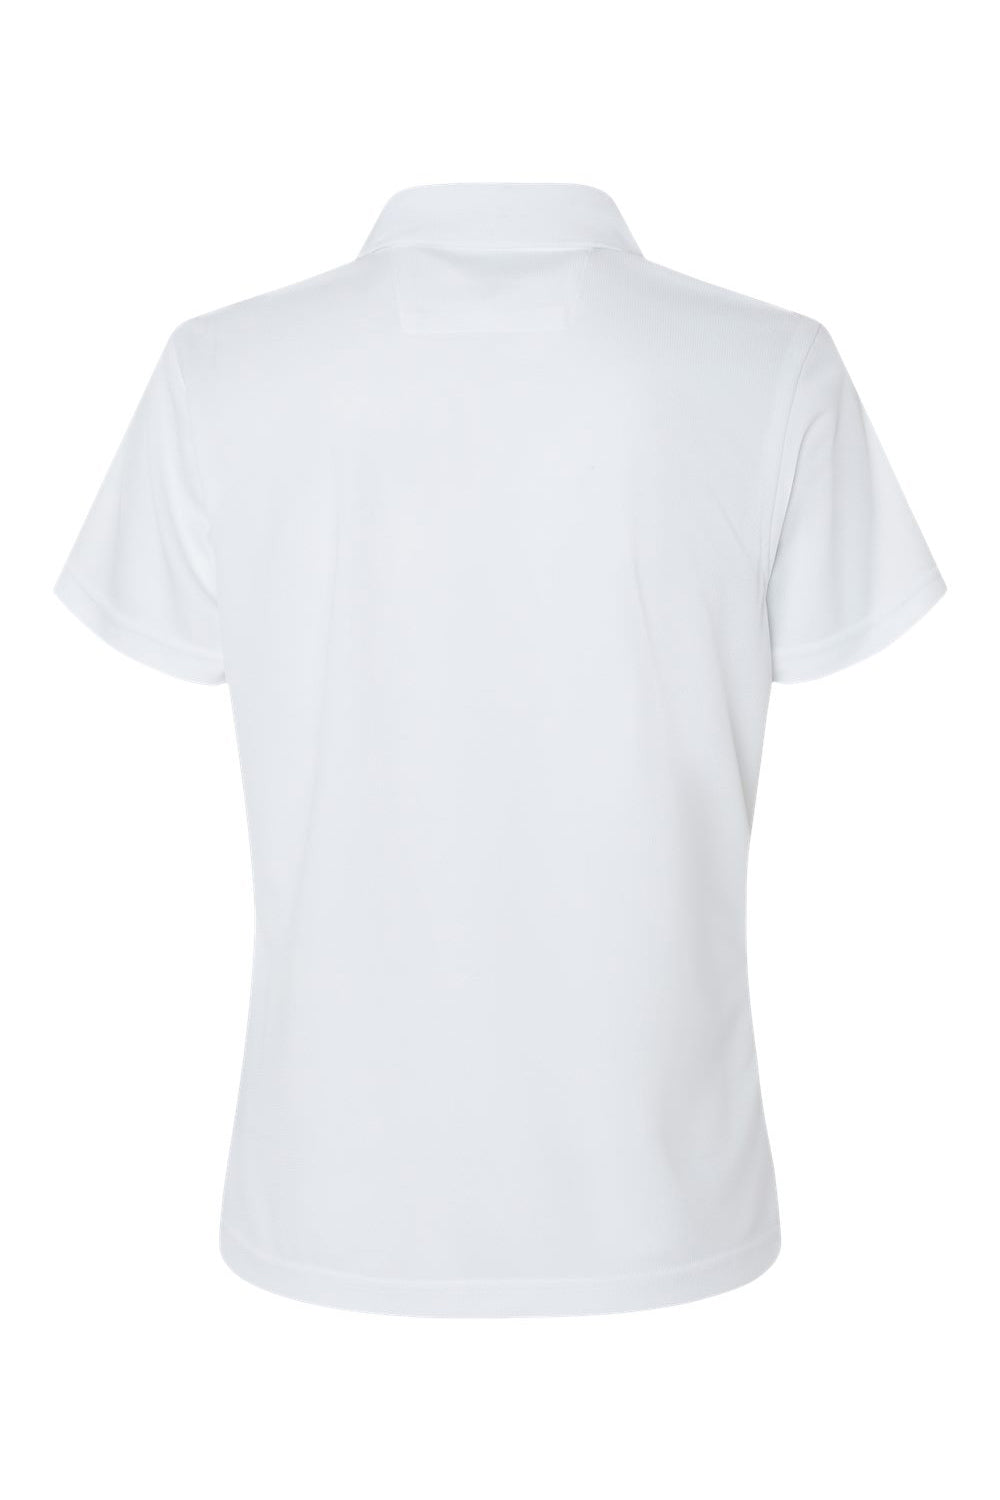 Paragon 104 Womens Saratoga Performance Mini Mesh Short Sleeve Polo Shirt White Flat Back